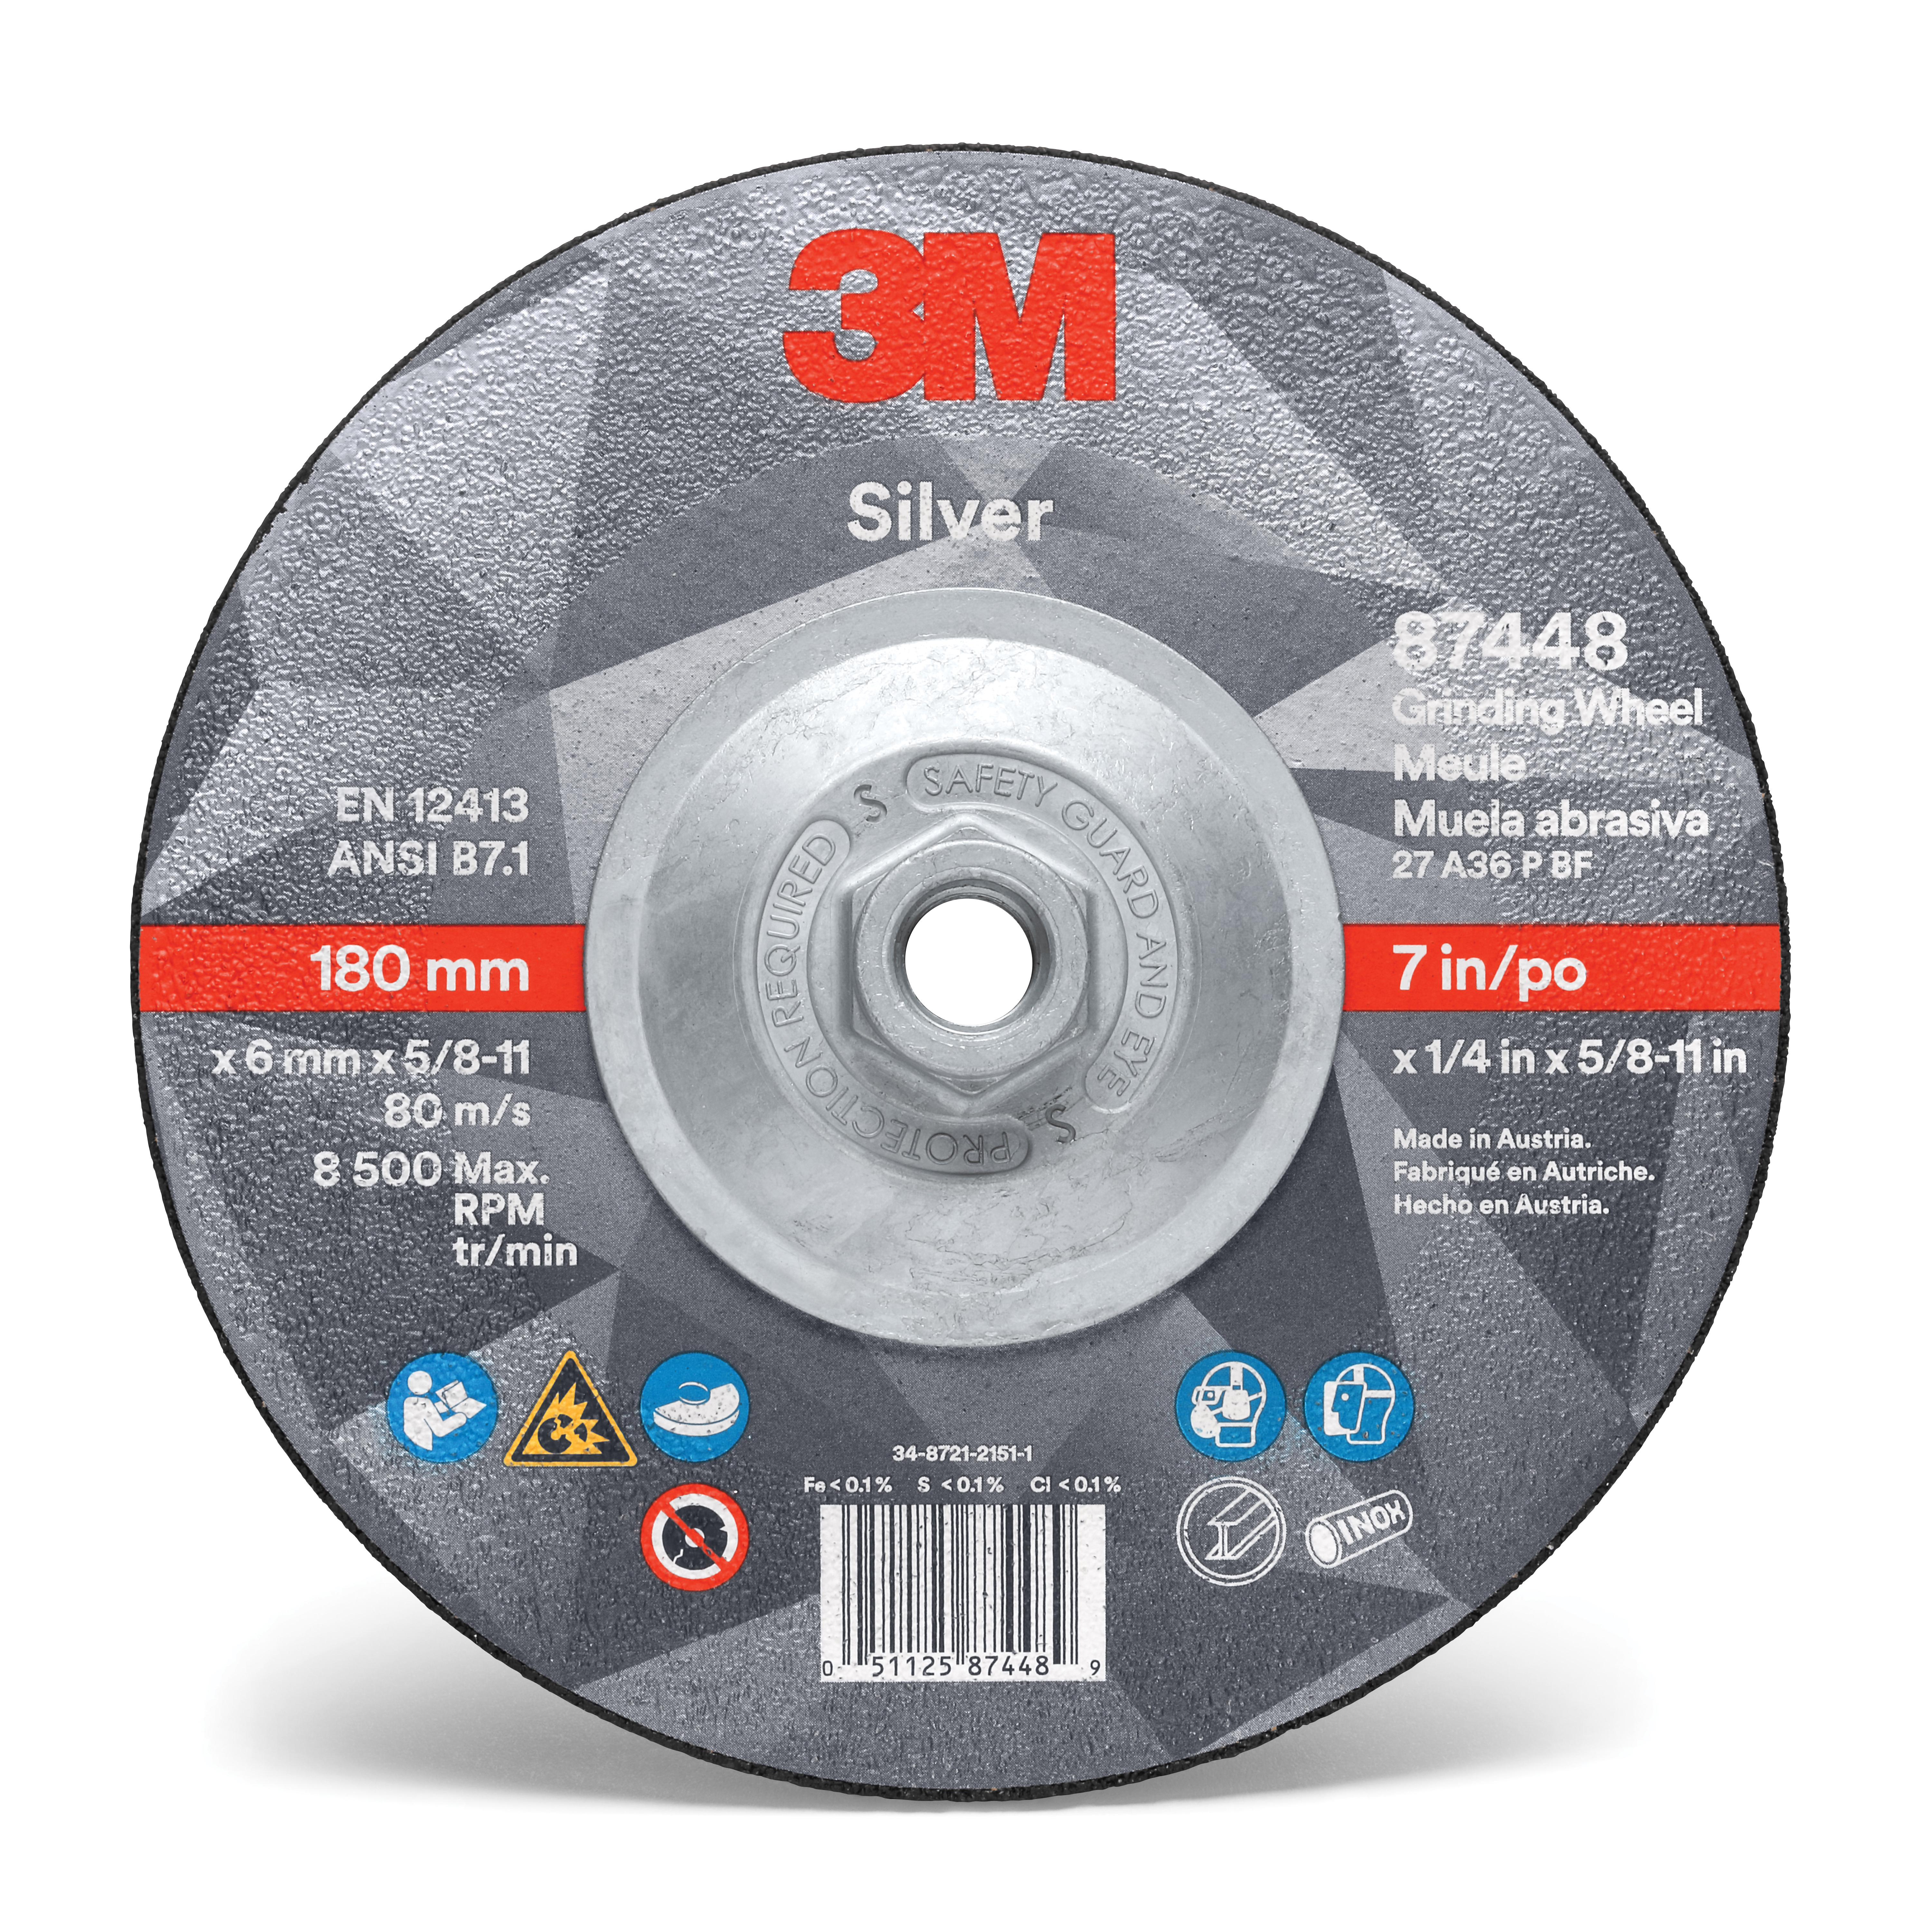 3M™ Silver 051125-87448 Silver Type 27 Depressed Center Quick-Change Grinding Wheel, 7 in Dia x 1/4 in THK, 36 Grit, Ceramic Grain Abrasive